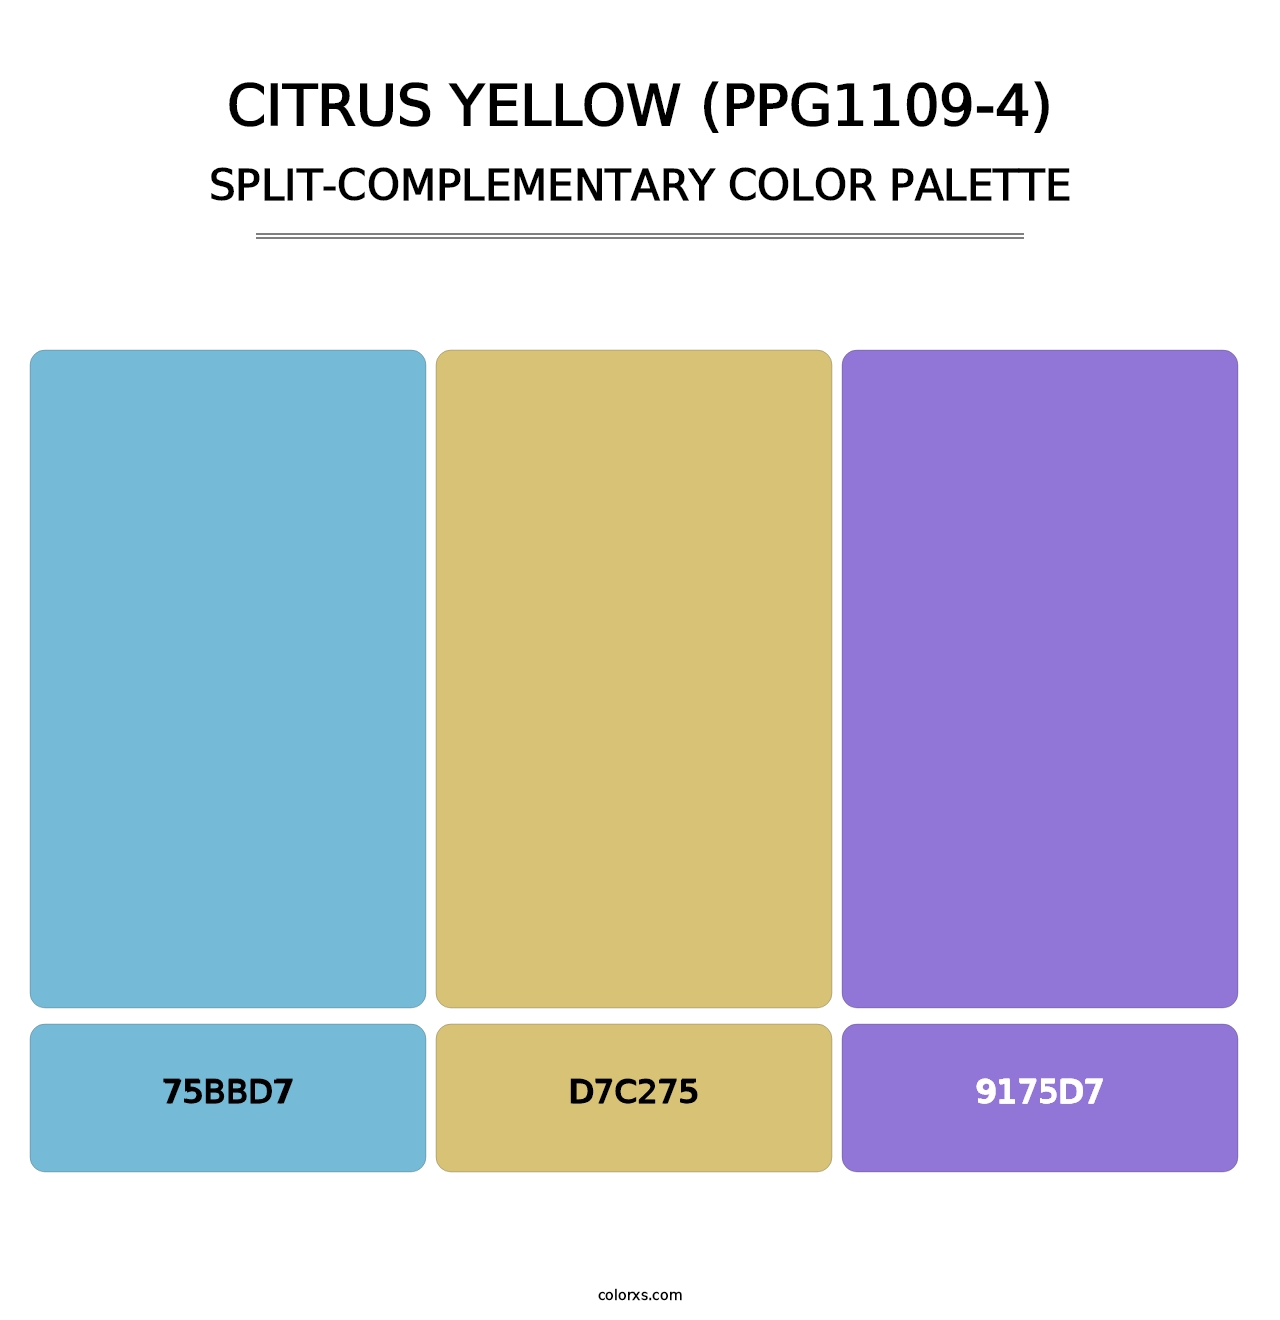 Citrus Yellow (PPG1109-4) - Split-Complementary Color Palette